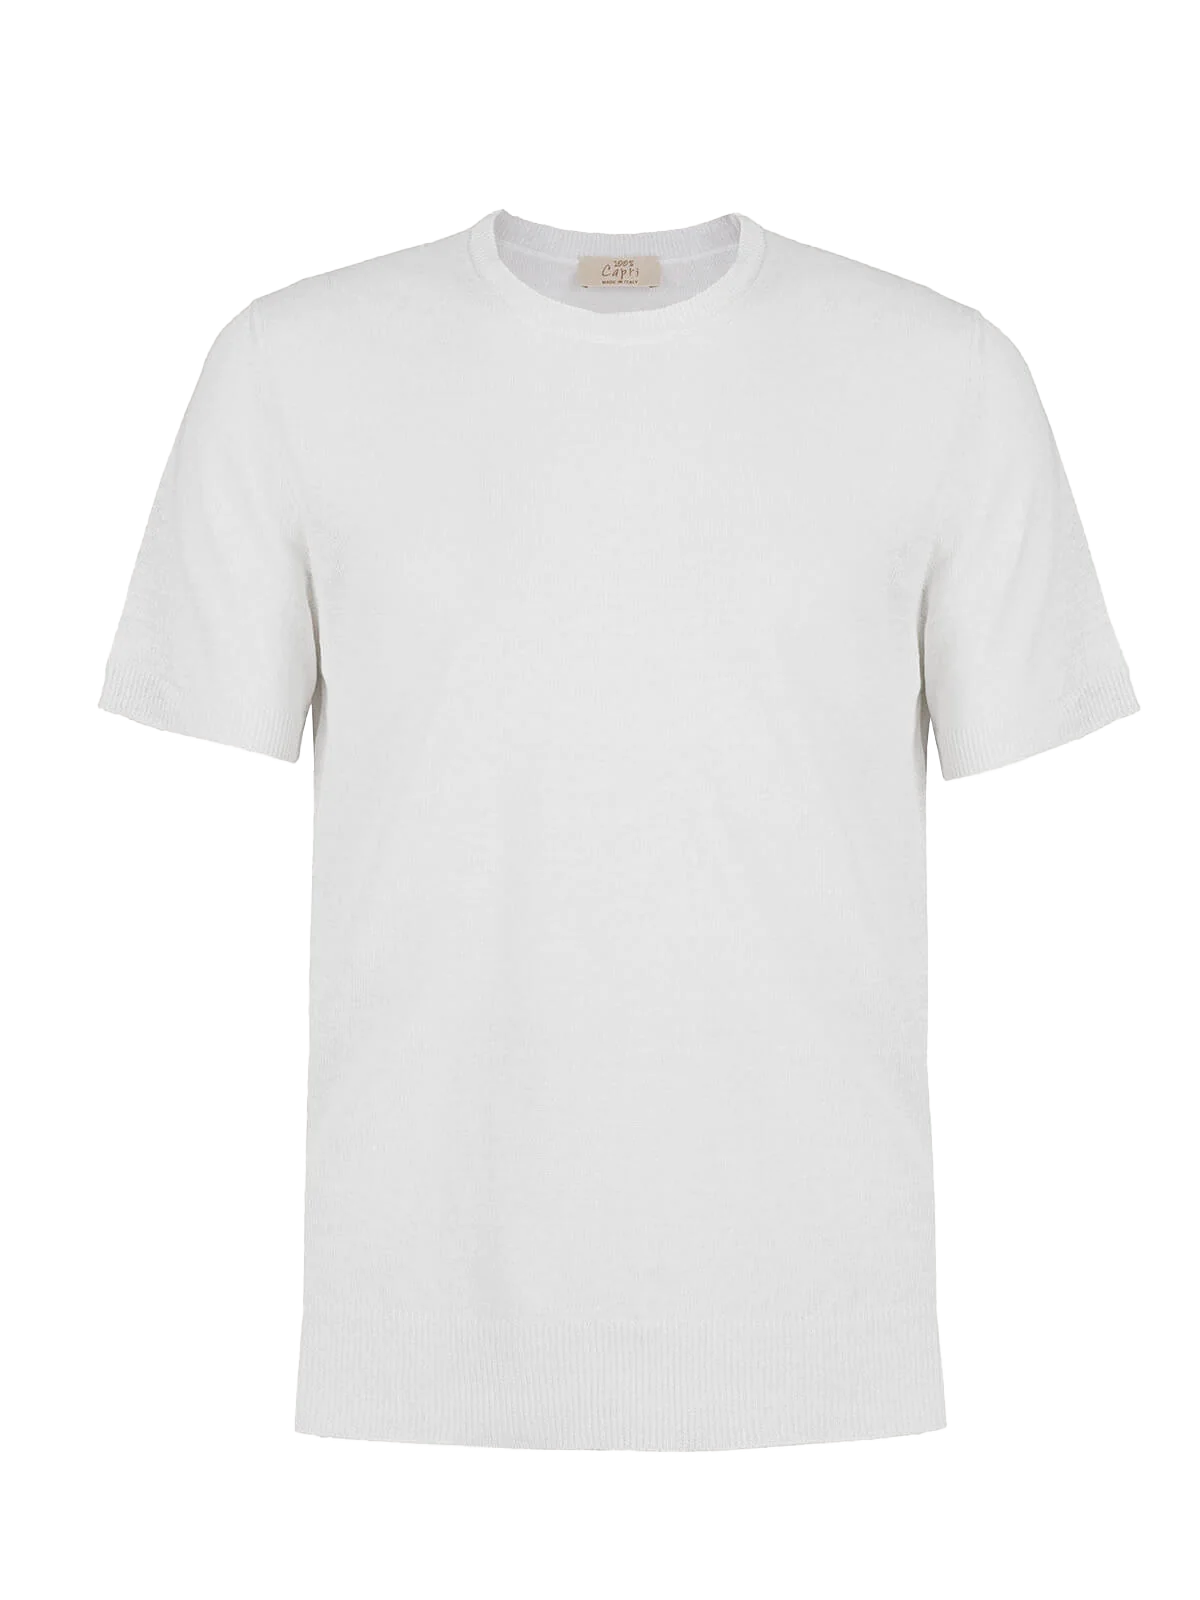 T-Shirt M/C 100% Capri white linen t-shirt front